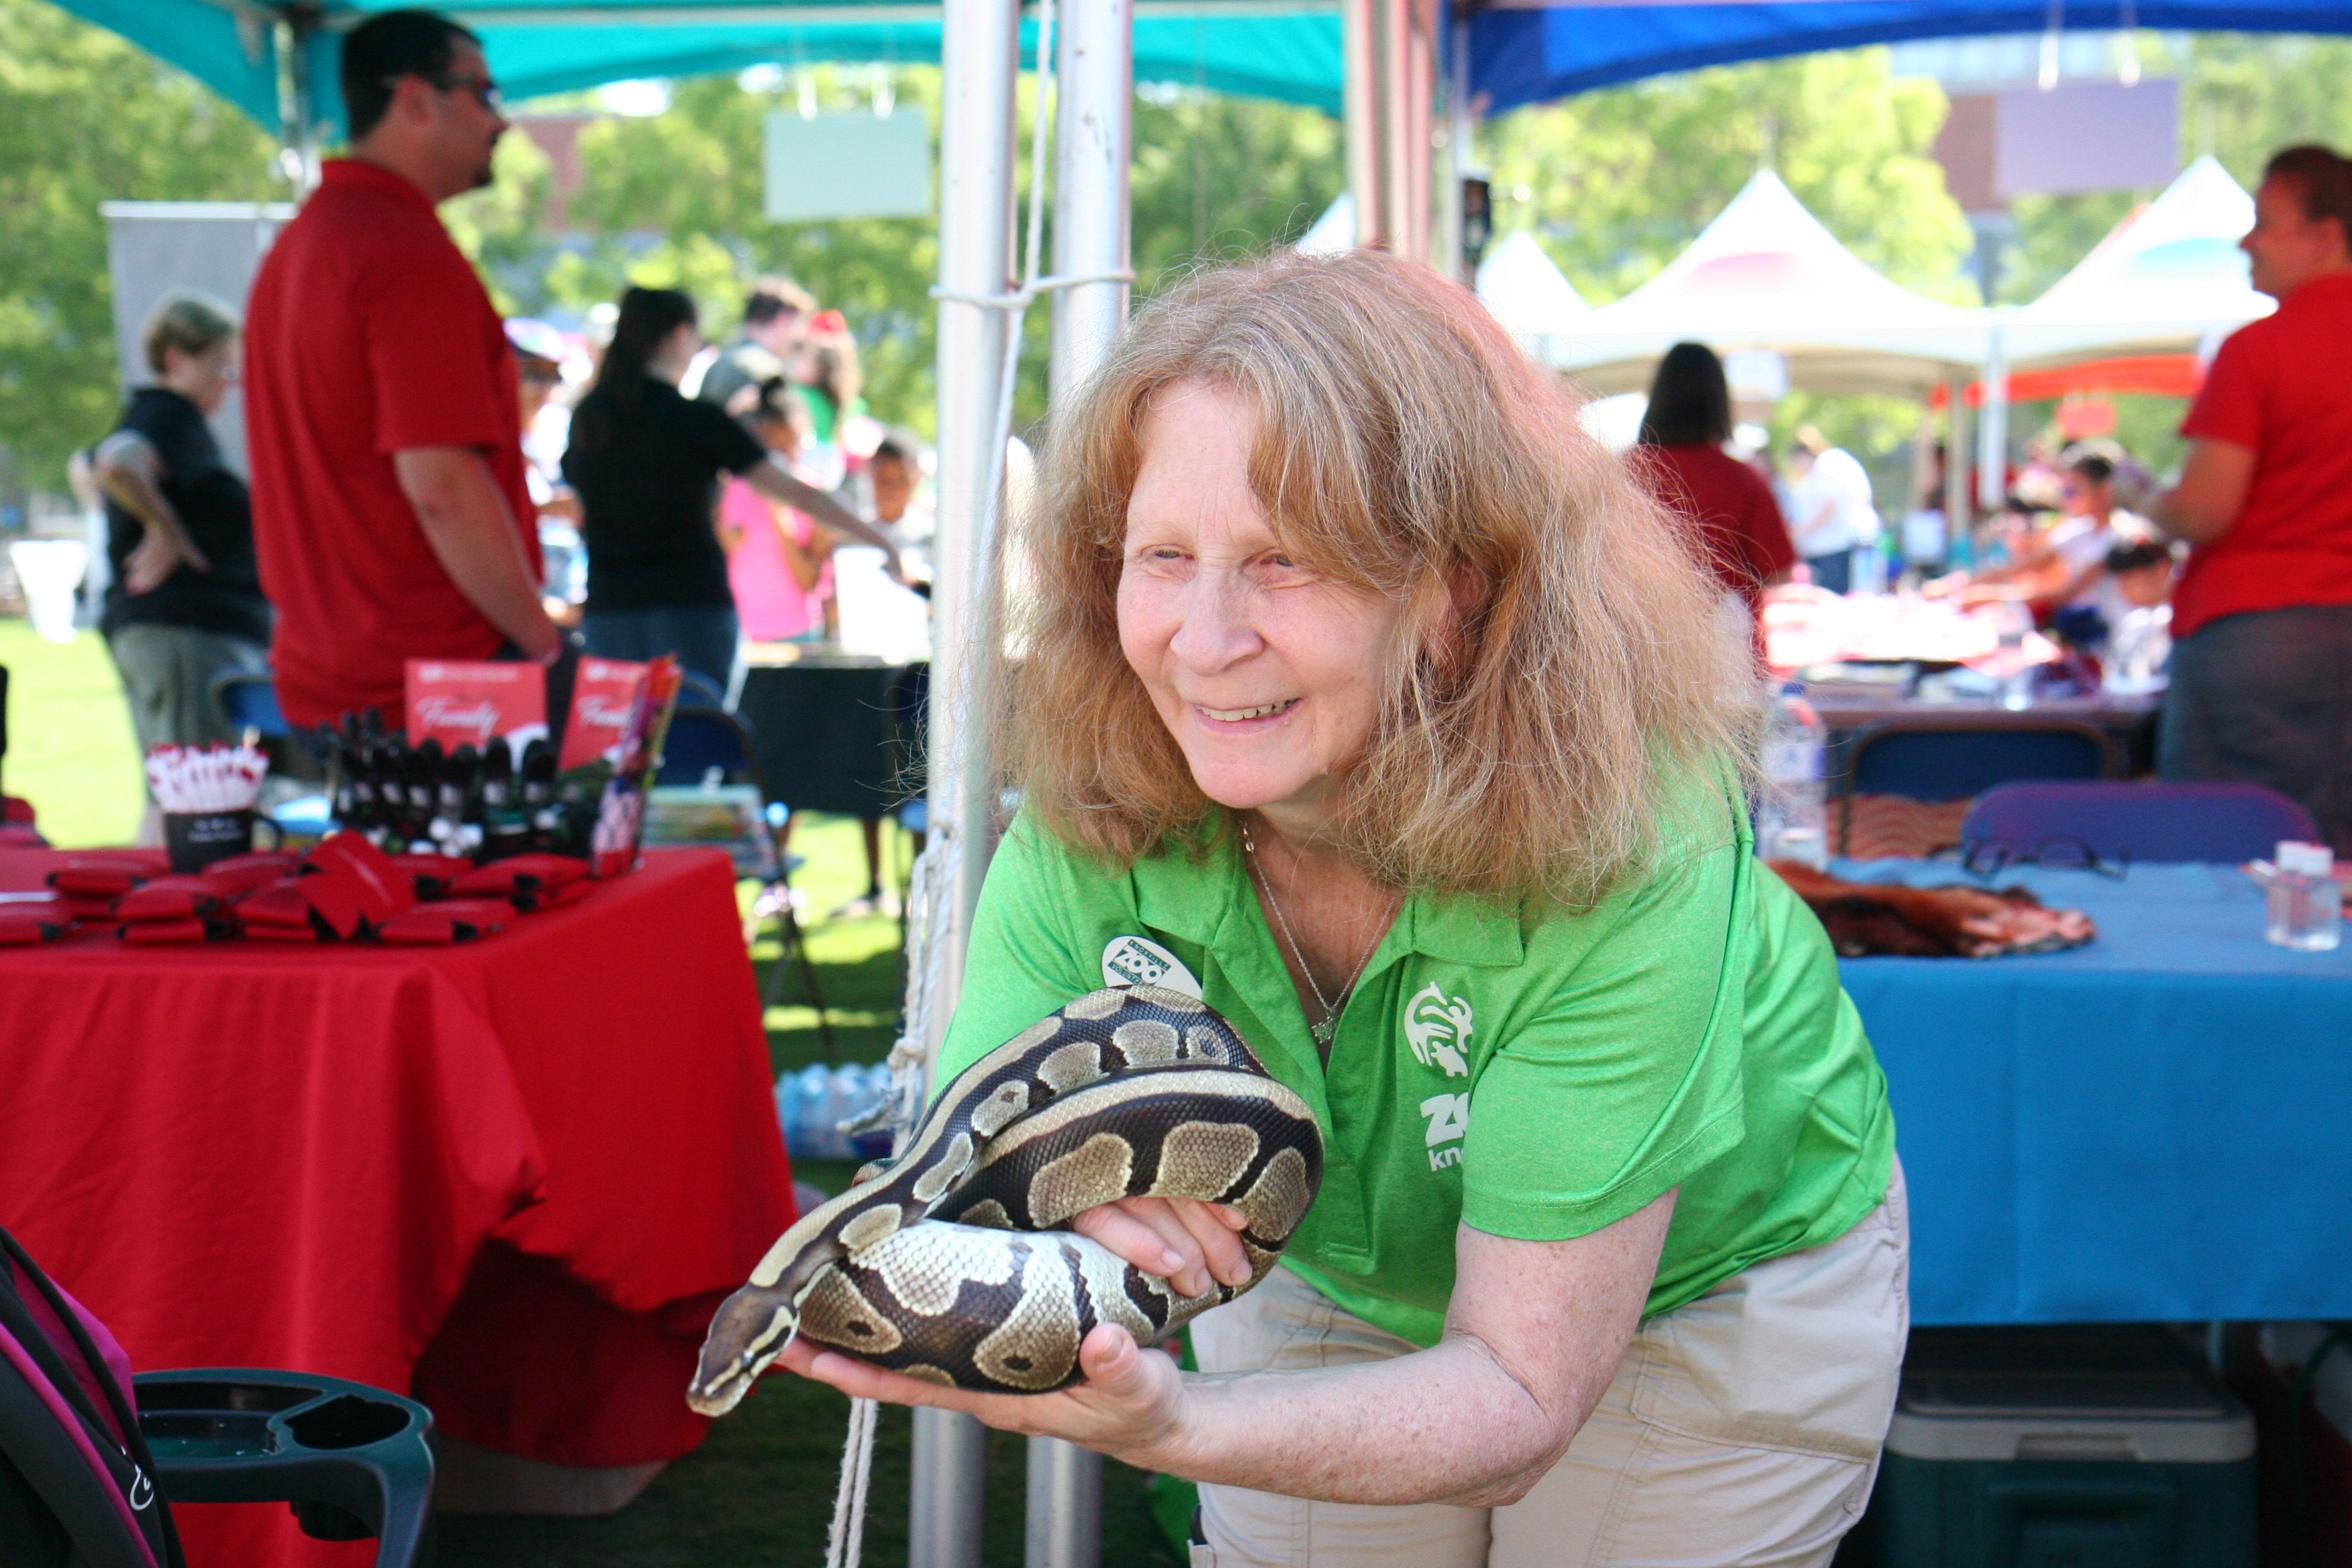 Zoo Presenter holding a snake during the Children's Festival for Reading